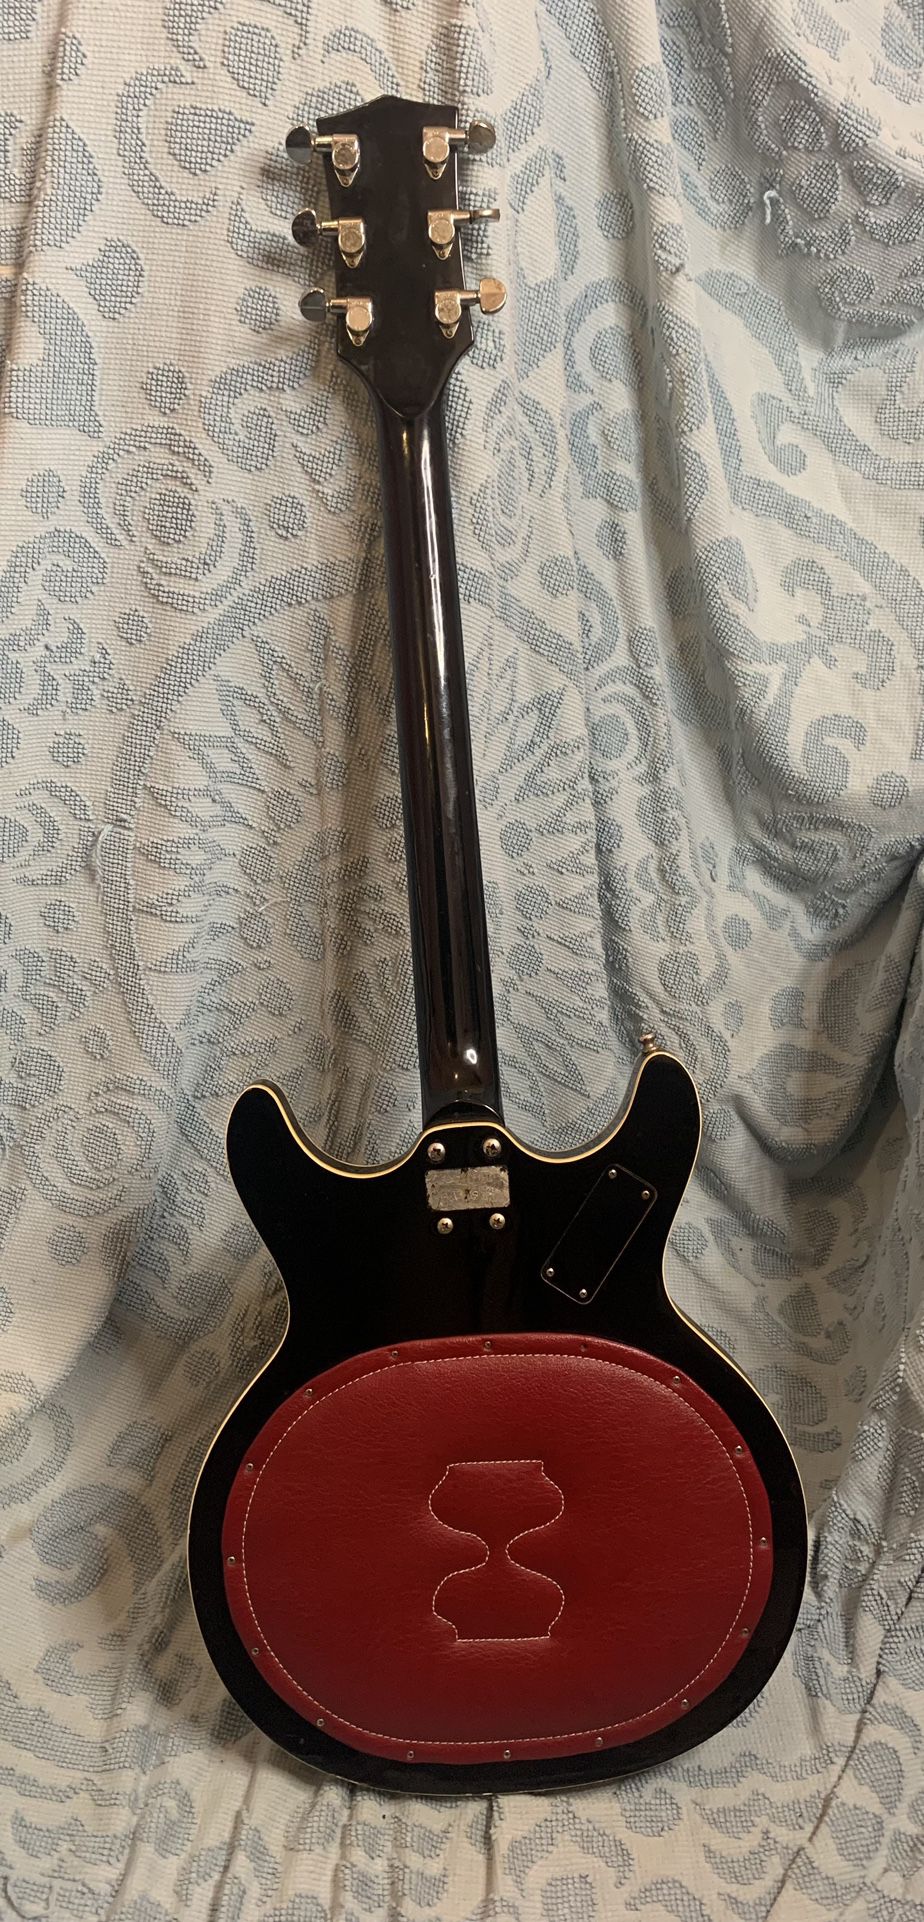 Black Widow Acoustic Guitar 68-73